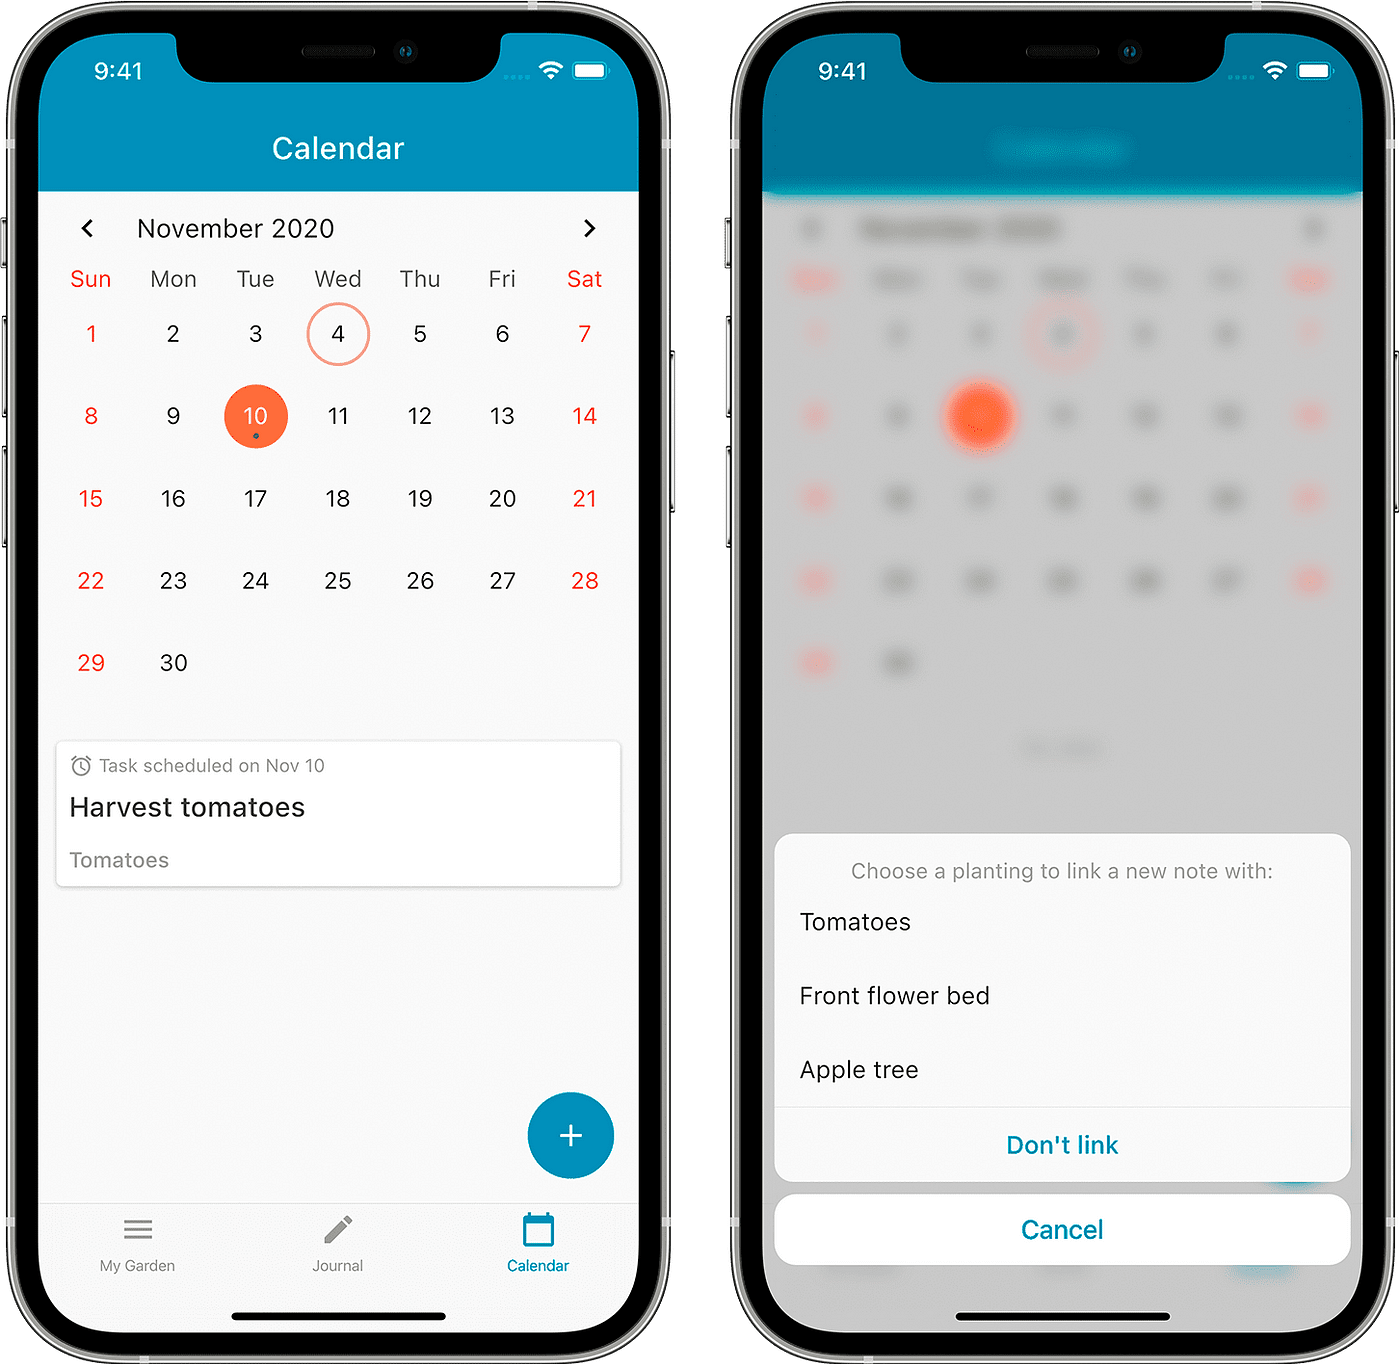 The calendar screen of Leafarise mobile app for gardeners